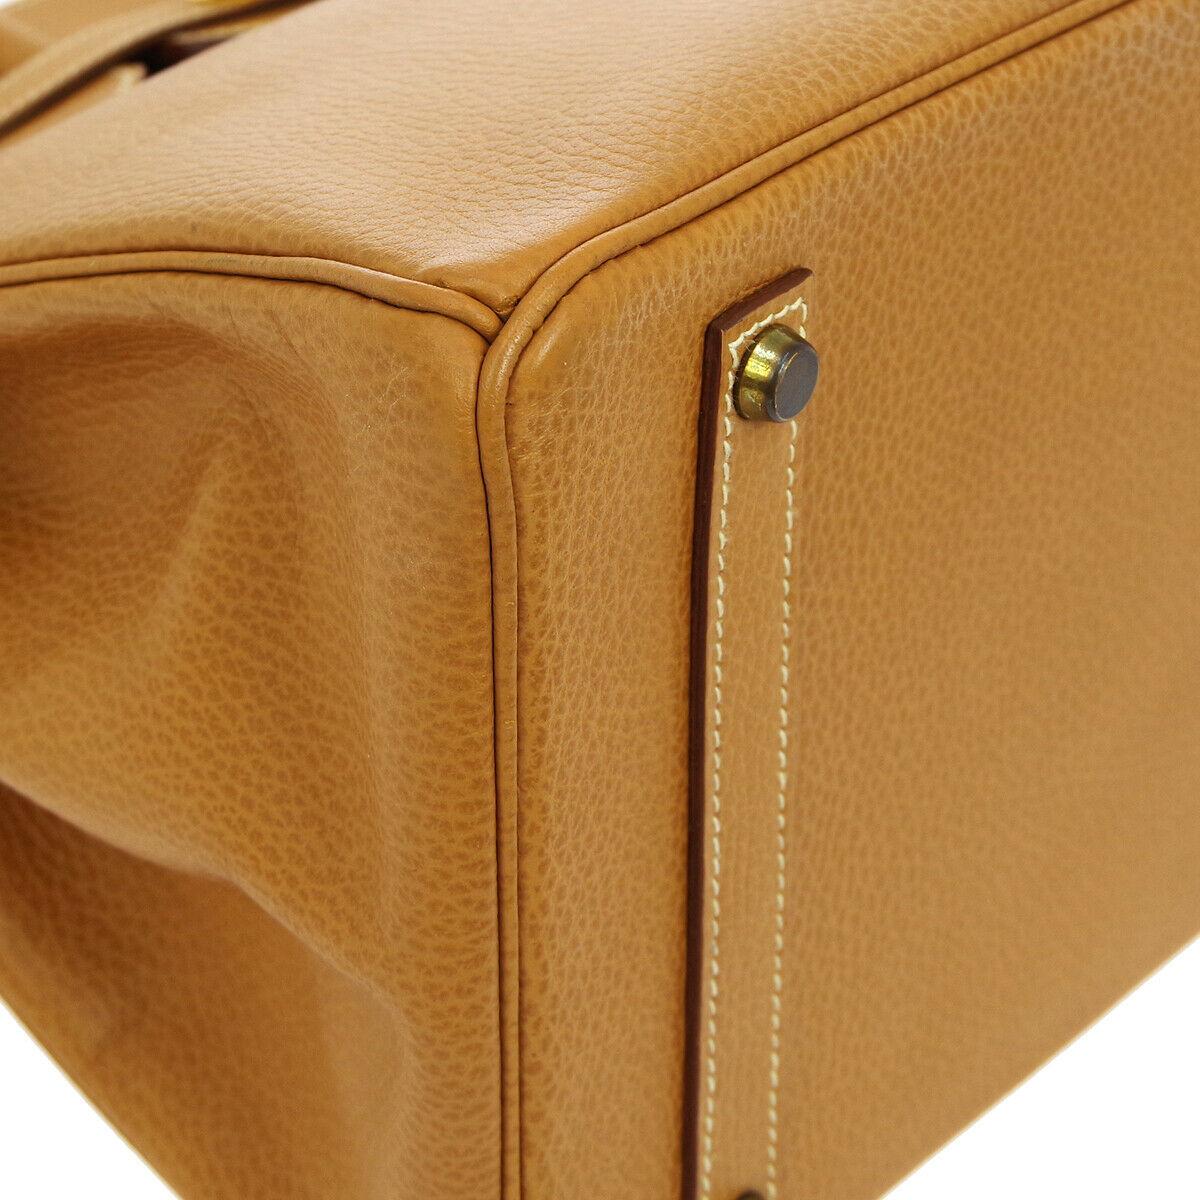 Hermes Birkin 35 Cognac Leather Gold Top Carryall Handle Satchel Travel Tote Bag 1